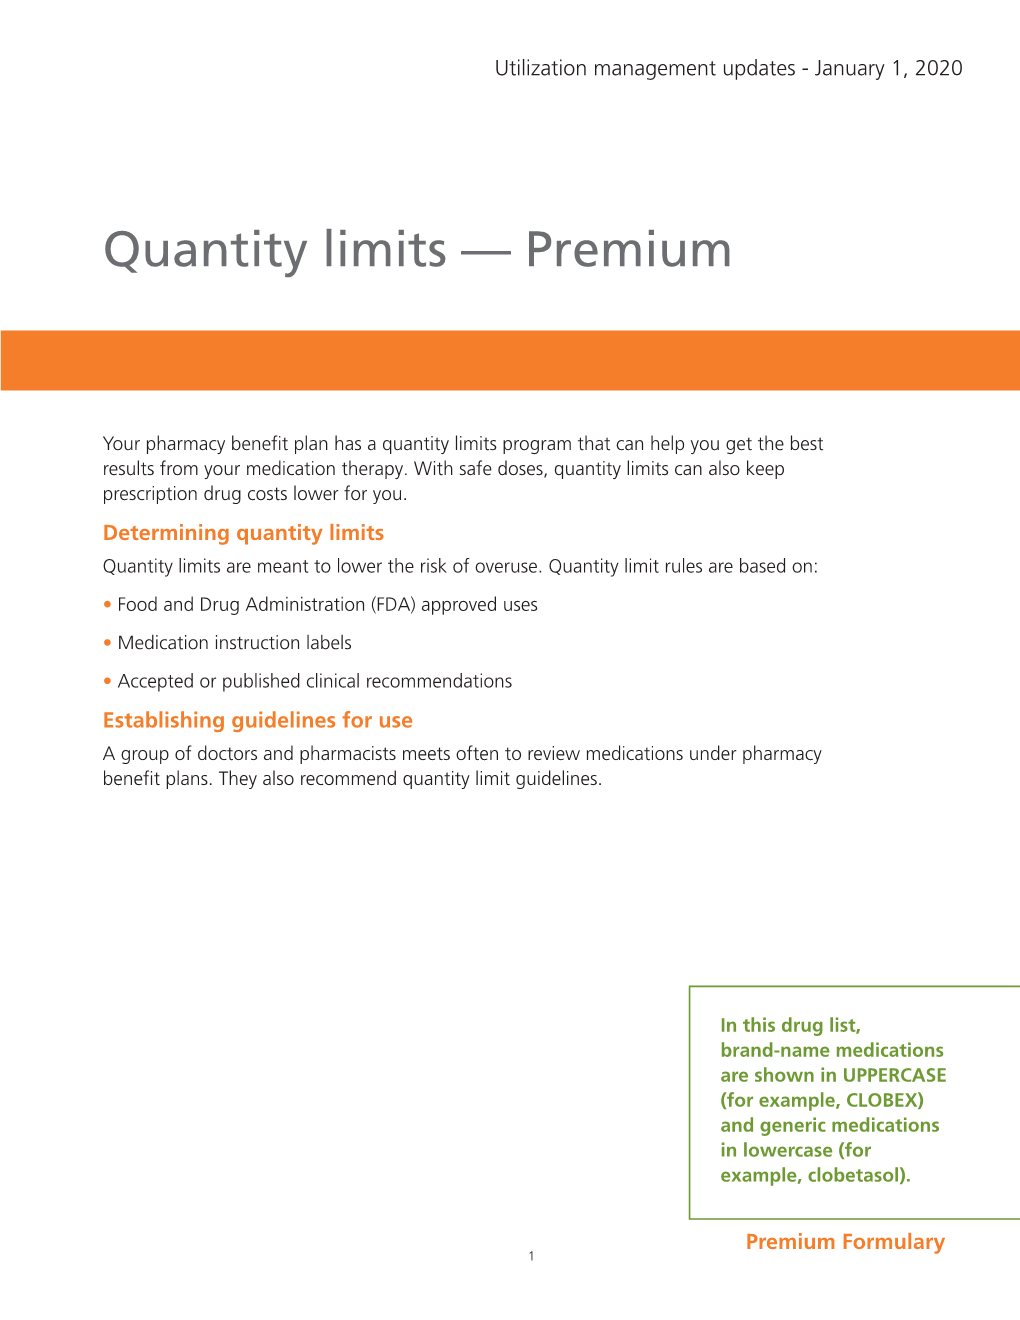 Optumrx Quantity Limits